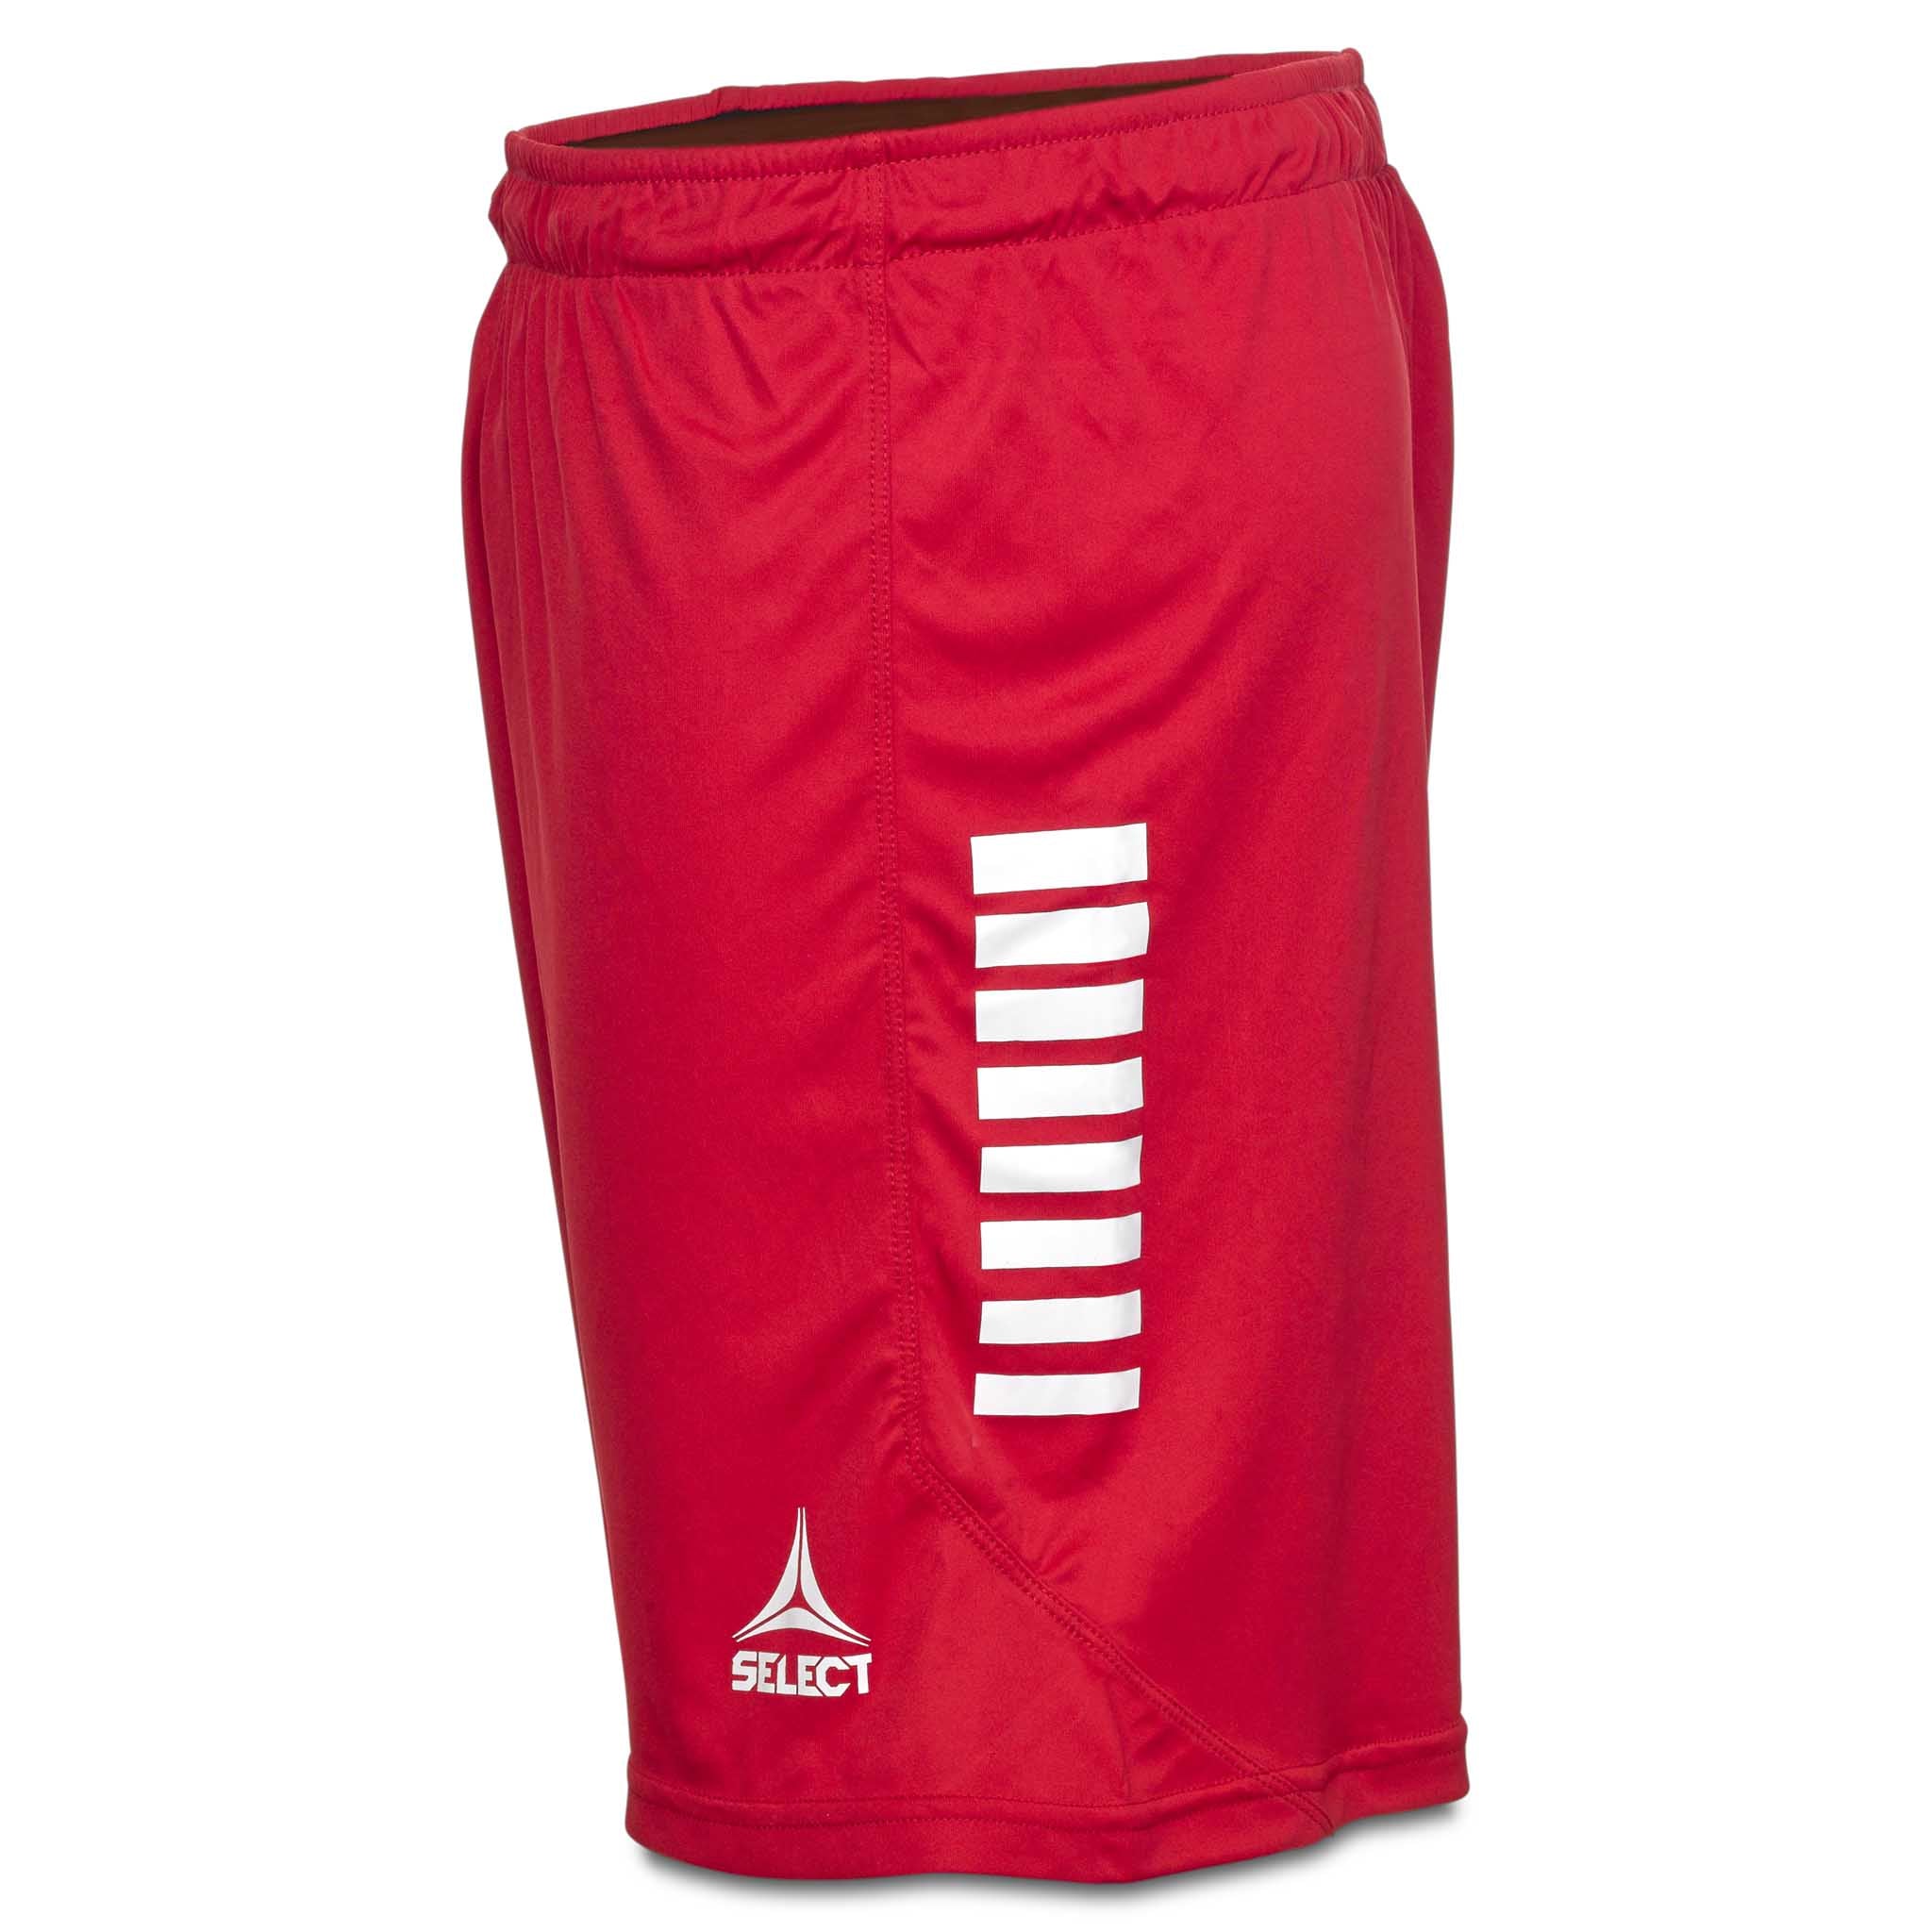 Monaco shorts - Barn #färg_röd/vit